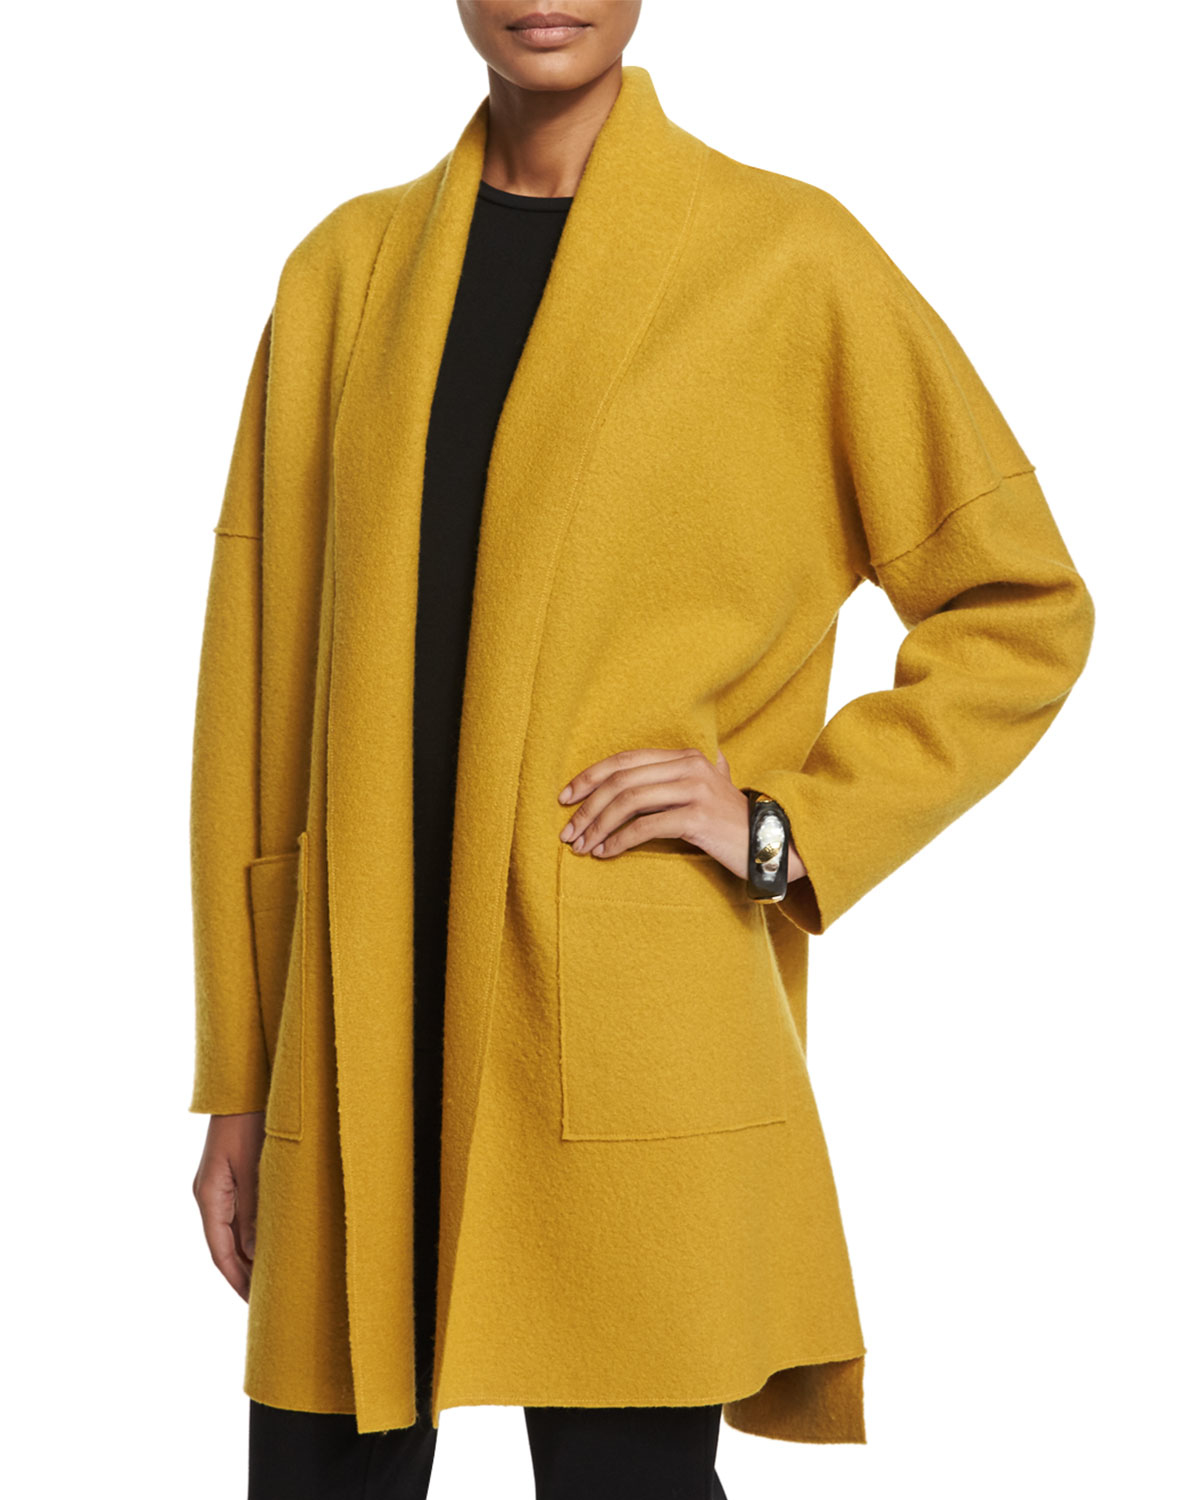 Lyst - Eileen fisher Boiled Wool Kimono Coat in Yellow